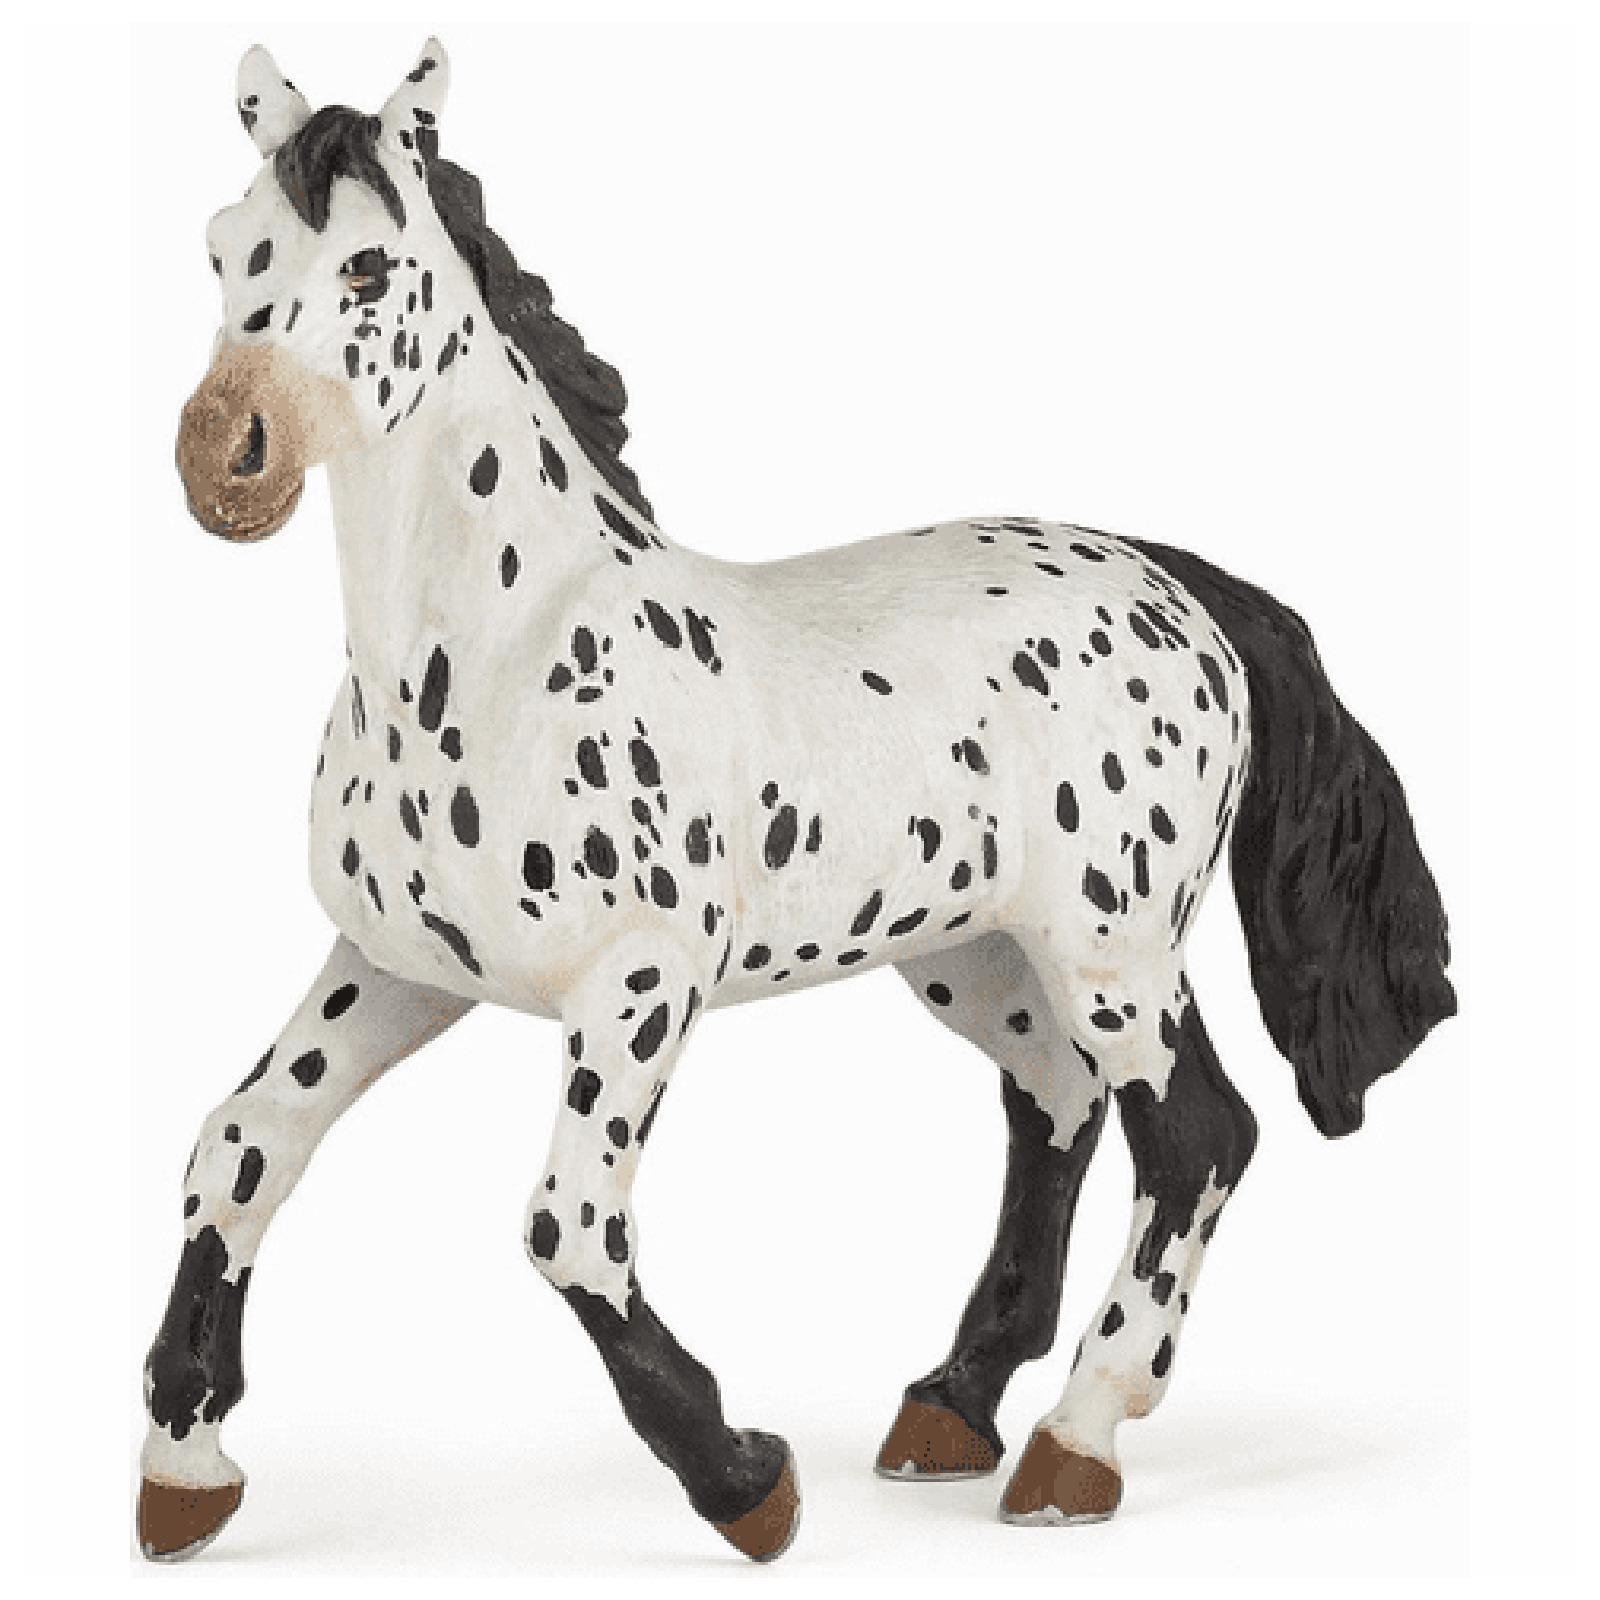 Papo Black Appaloosa Horse Animal Figure 51539 New In Stock